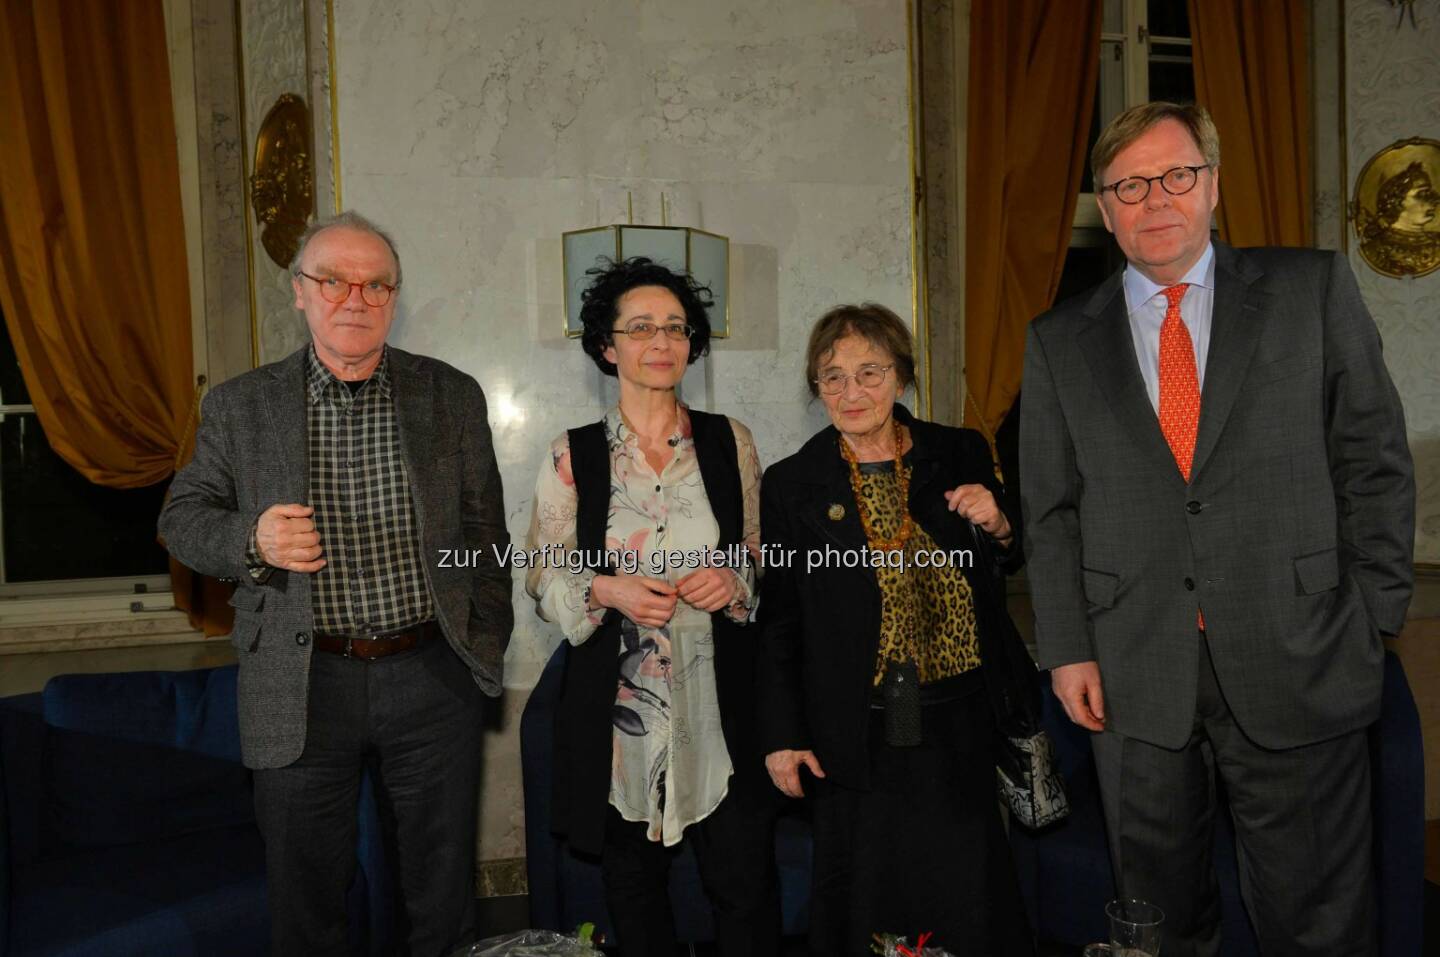 Schriftsteller Michael Köhlmeier, Philosophin Isolde Charim, Philosophin Ágnes Heller, Bank Austria Vorstandsvorsitzender Willibald Cernko